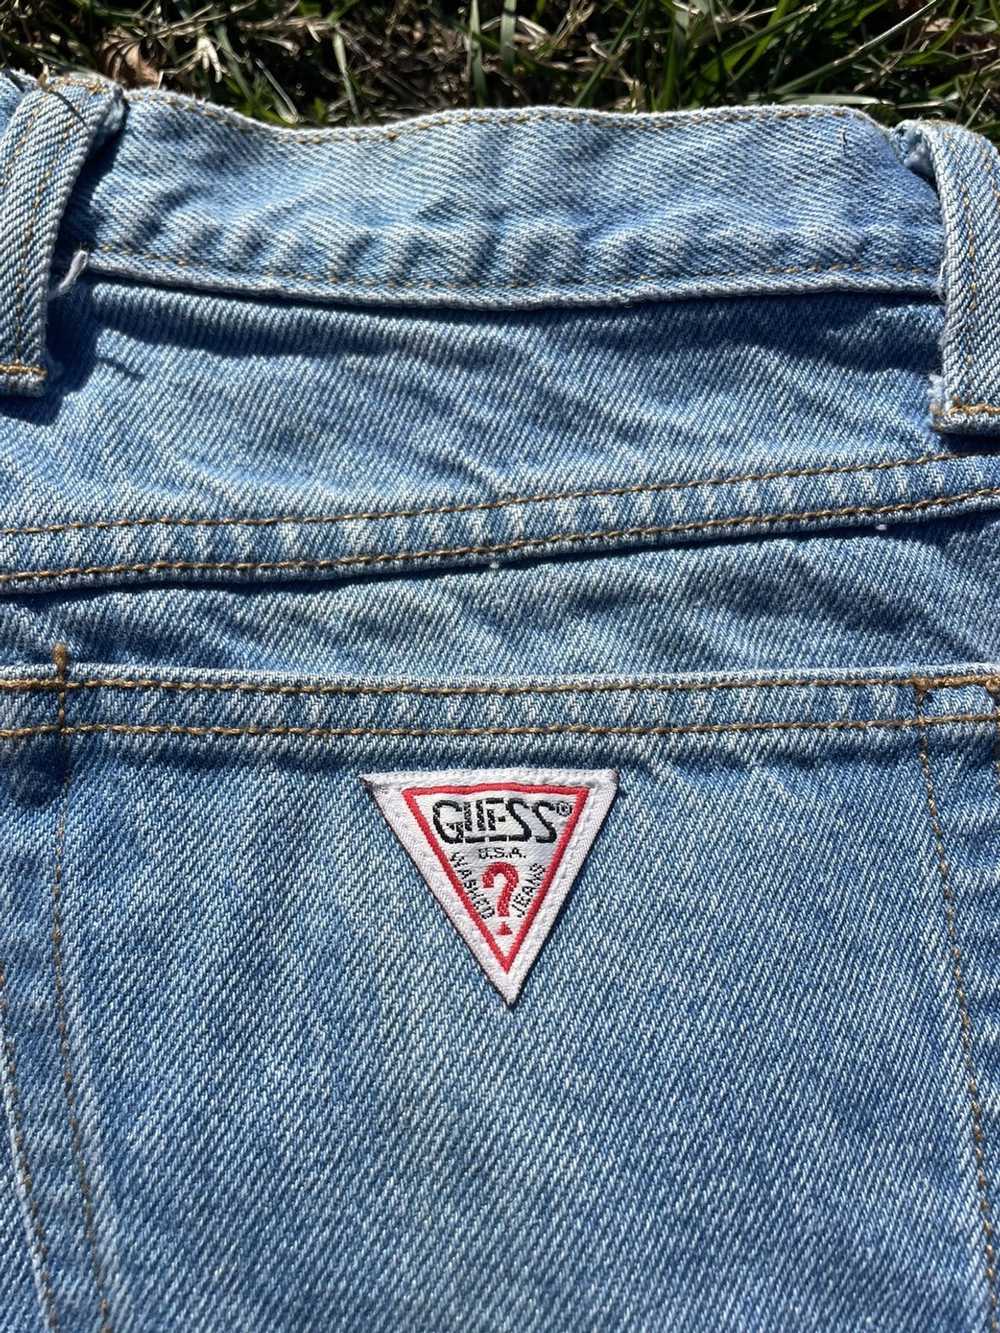 Guess Vintage 90’s Guess Jeans 32X32 - image 5